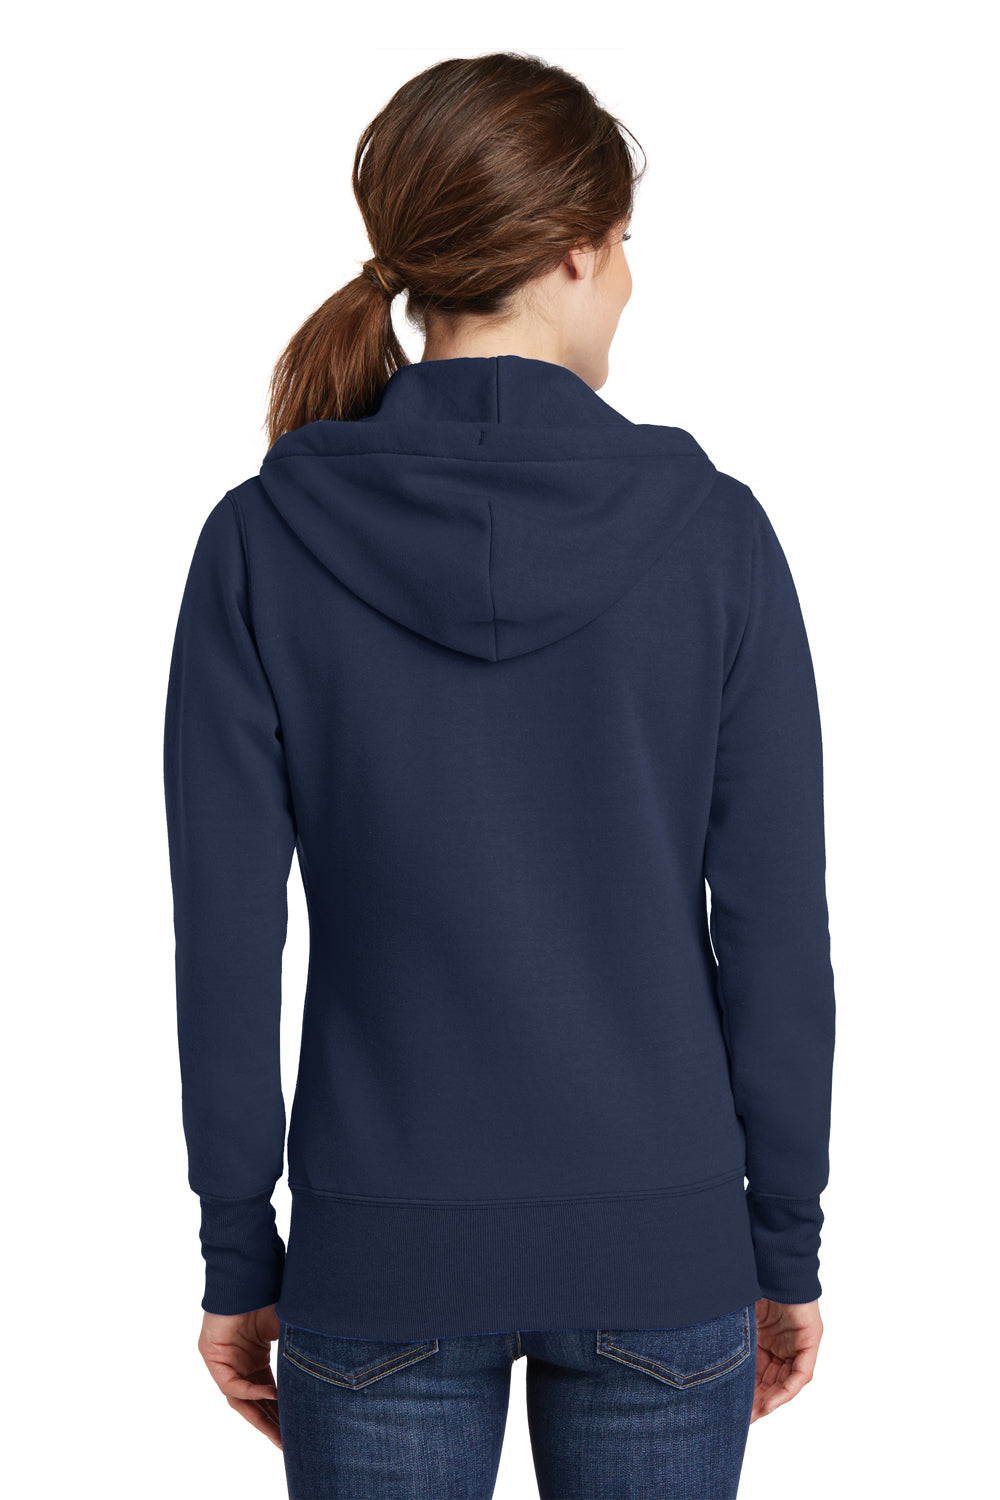 Port & Company LPC78ZH Womens Core Fleece Full Zip Hooded Sweatshirt Hoodie Navy Blue Back